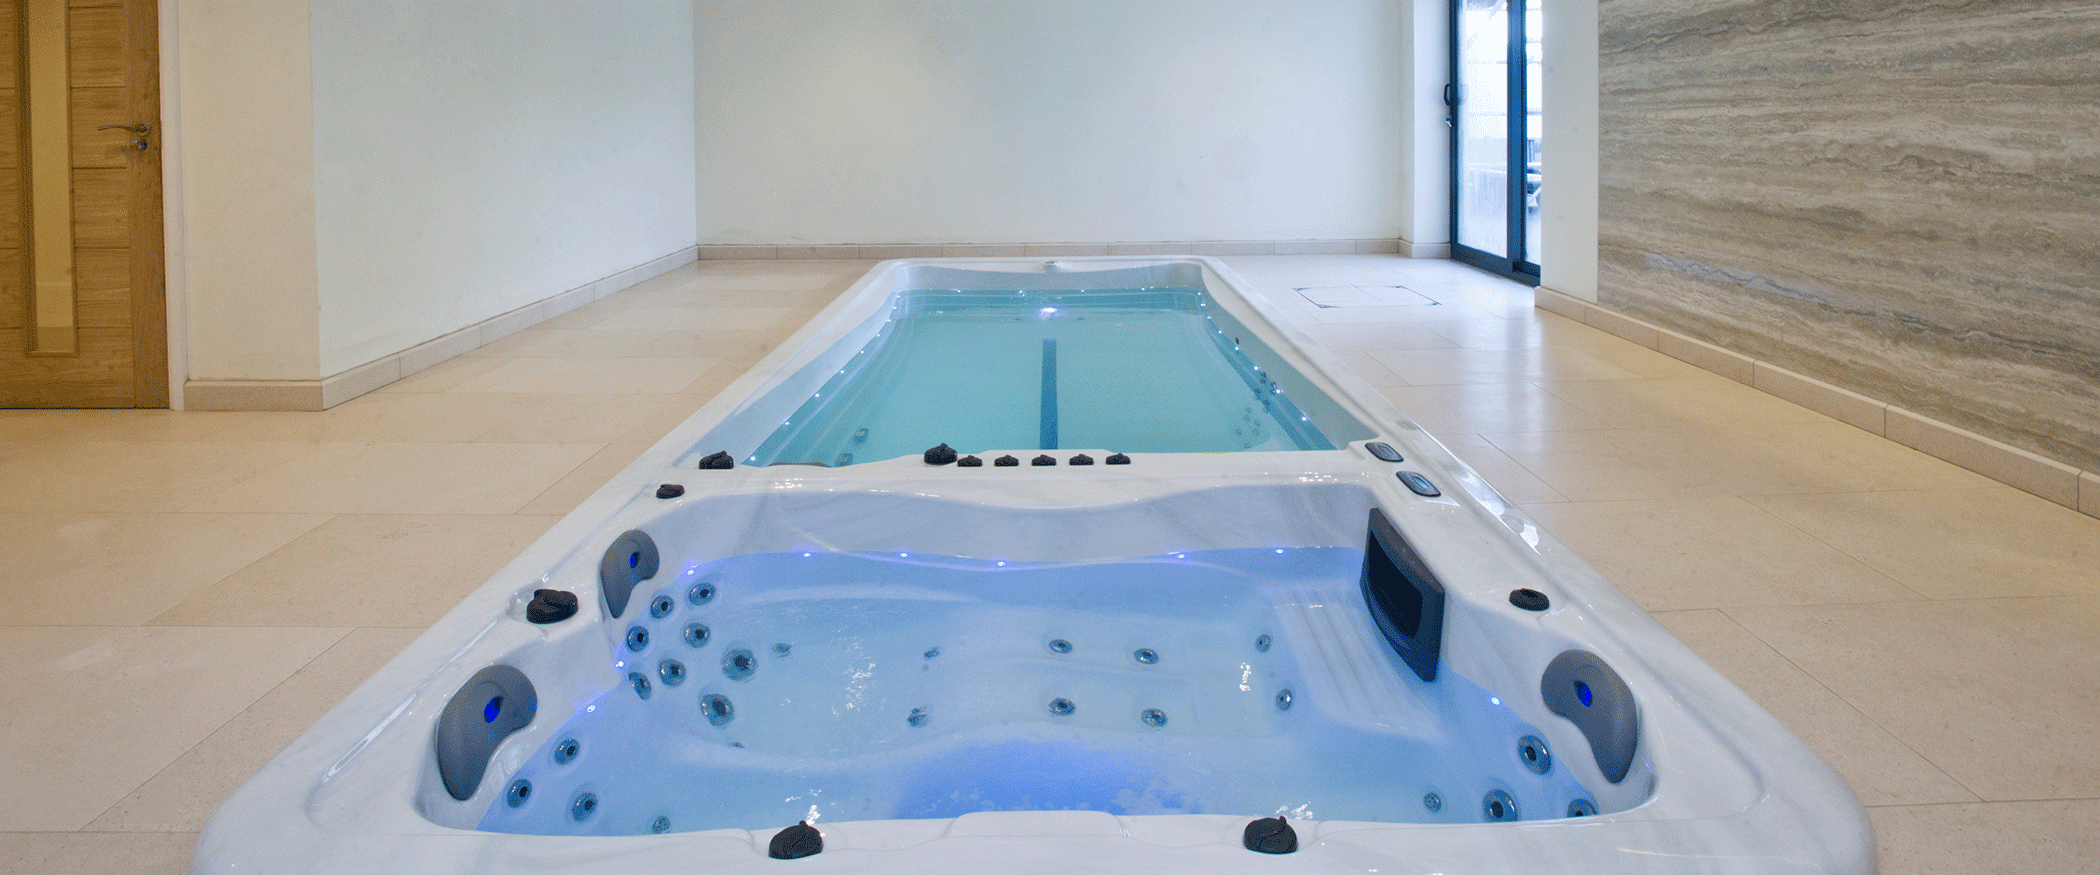 basen minibasen swim spa basen do pływania przeciwprąd sztuczna fala